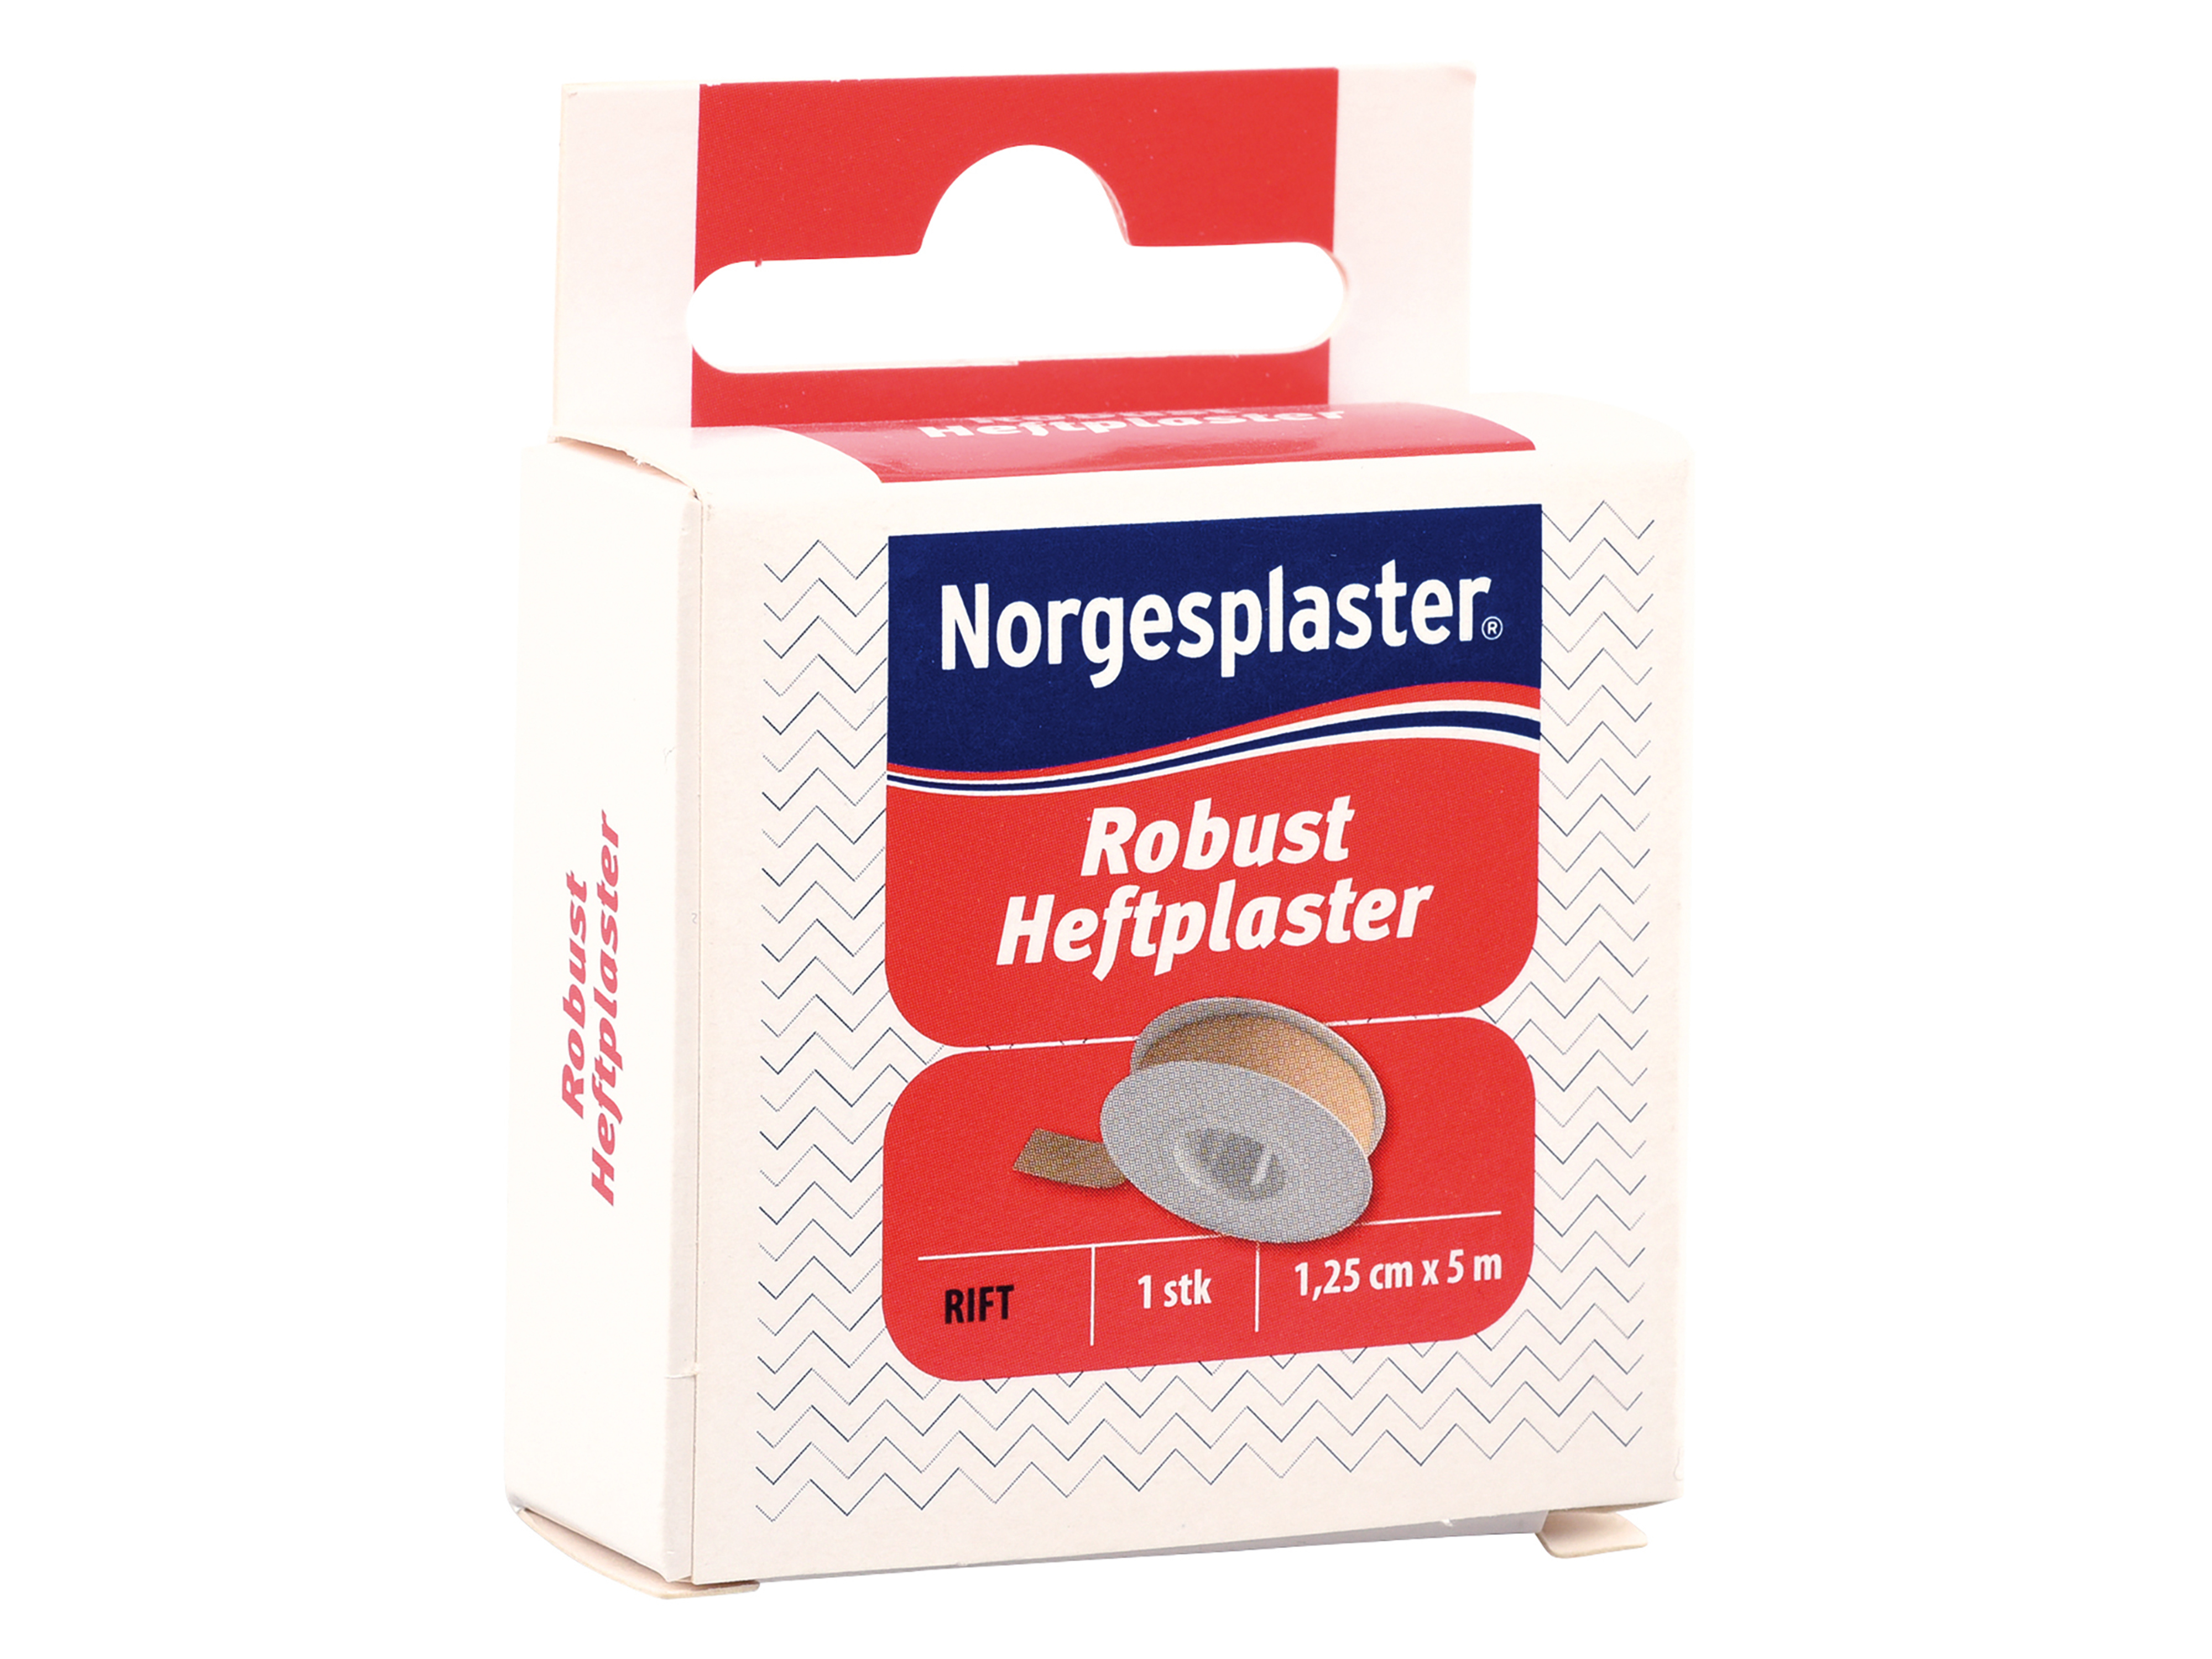 Norgesplaster Robust heftplaster, 1,2cm x 5m, 1 stk.